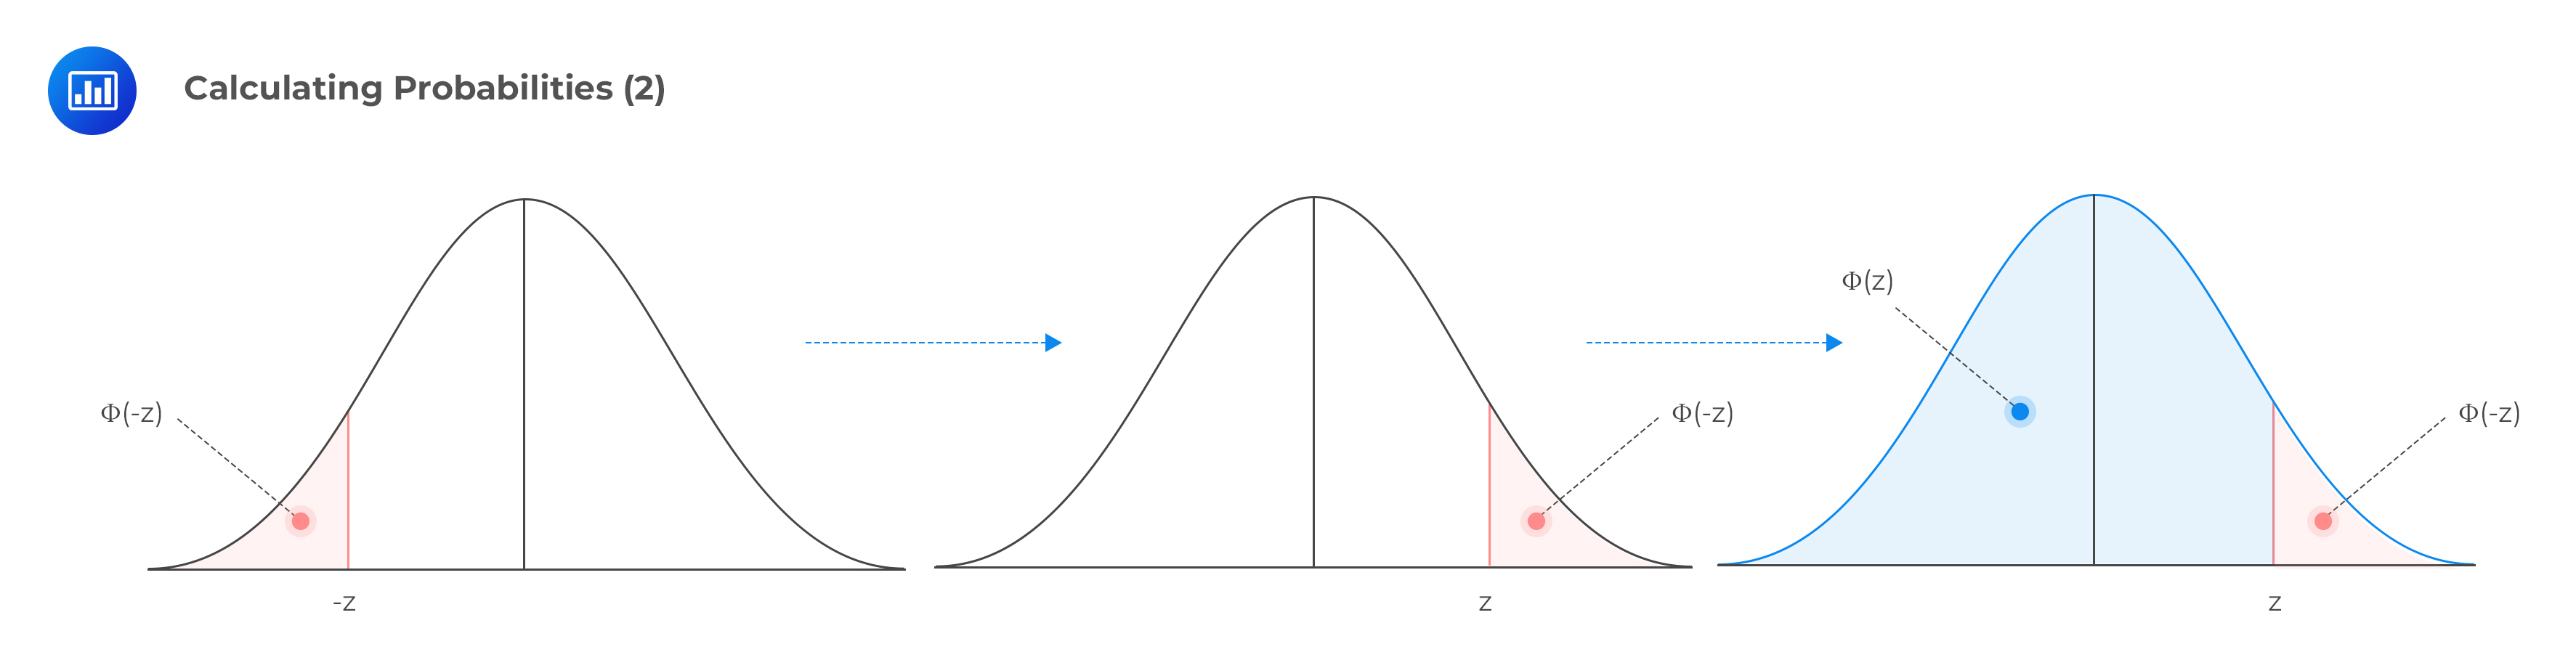 calculating-probabilities-2